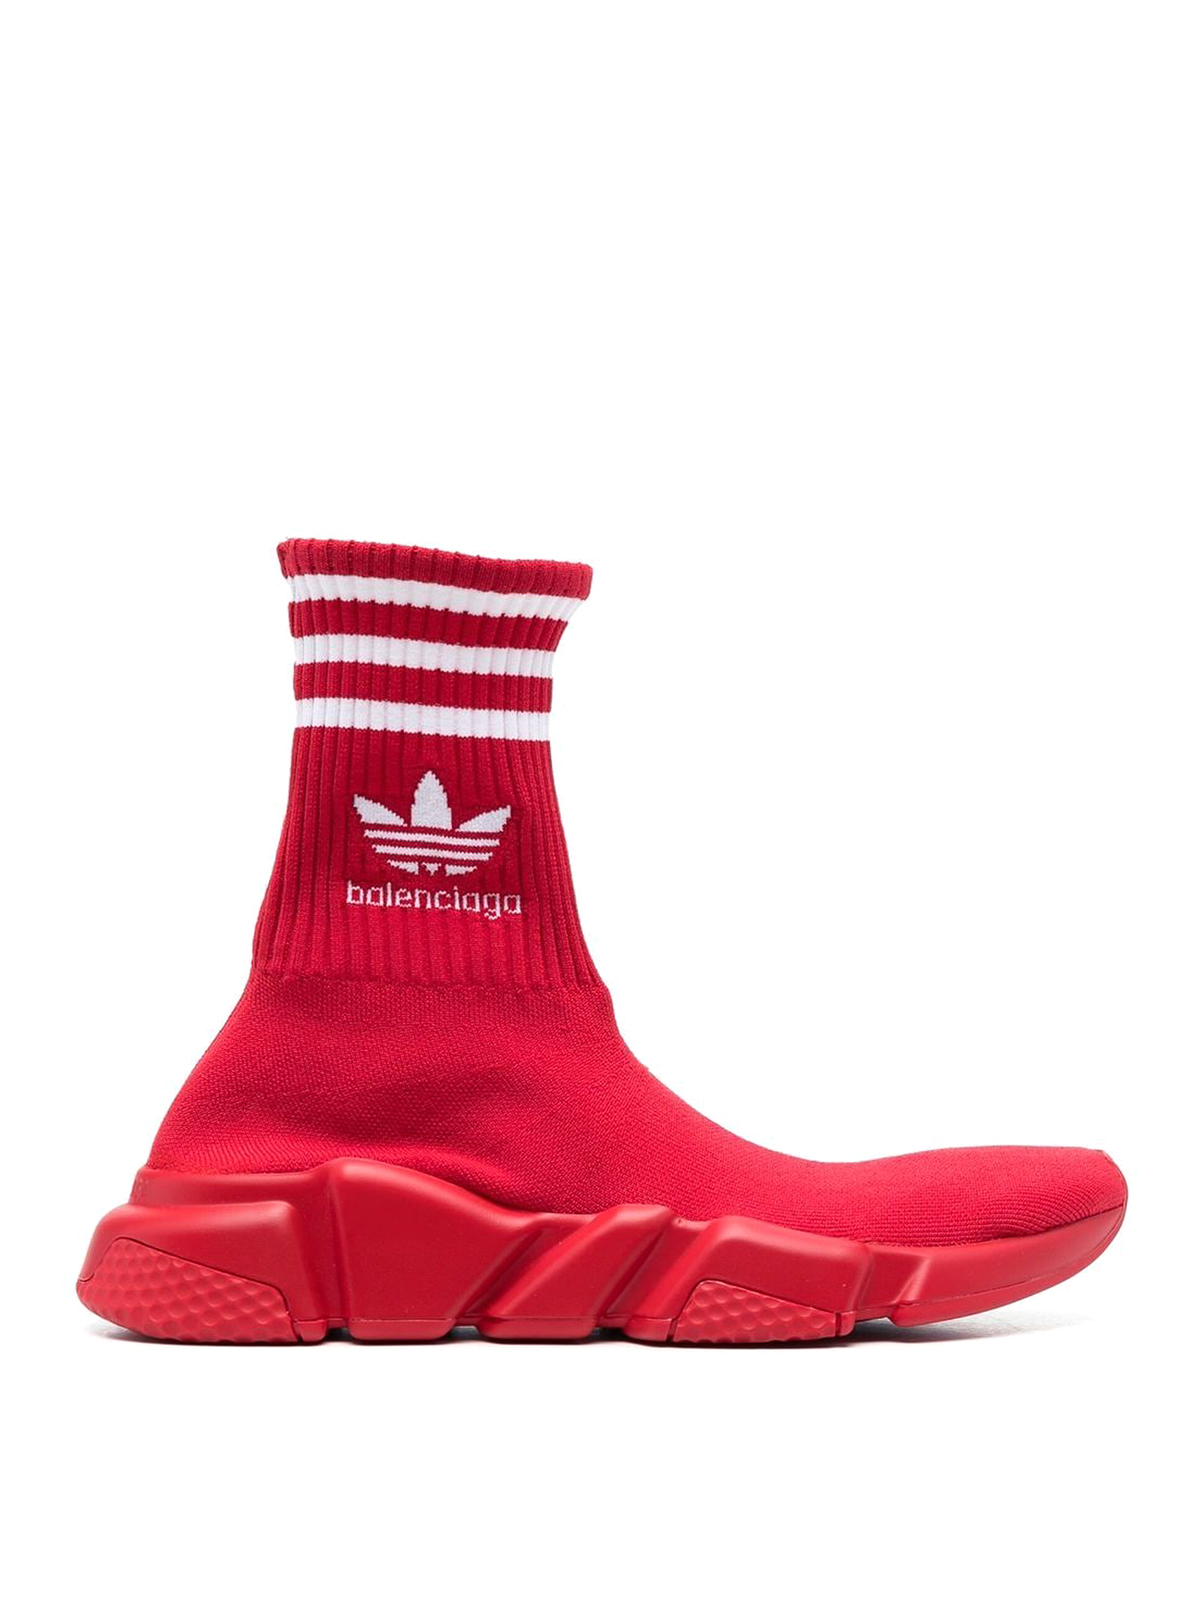 Adidas Originals Speed Sneakers In Red